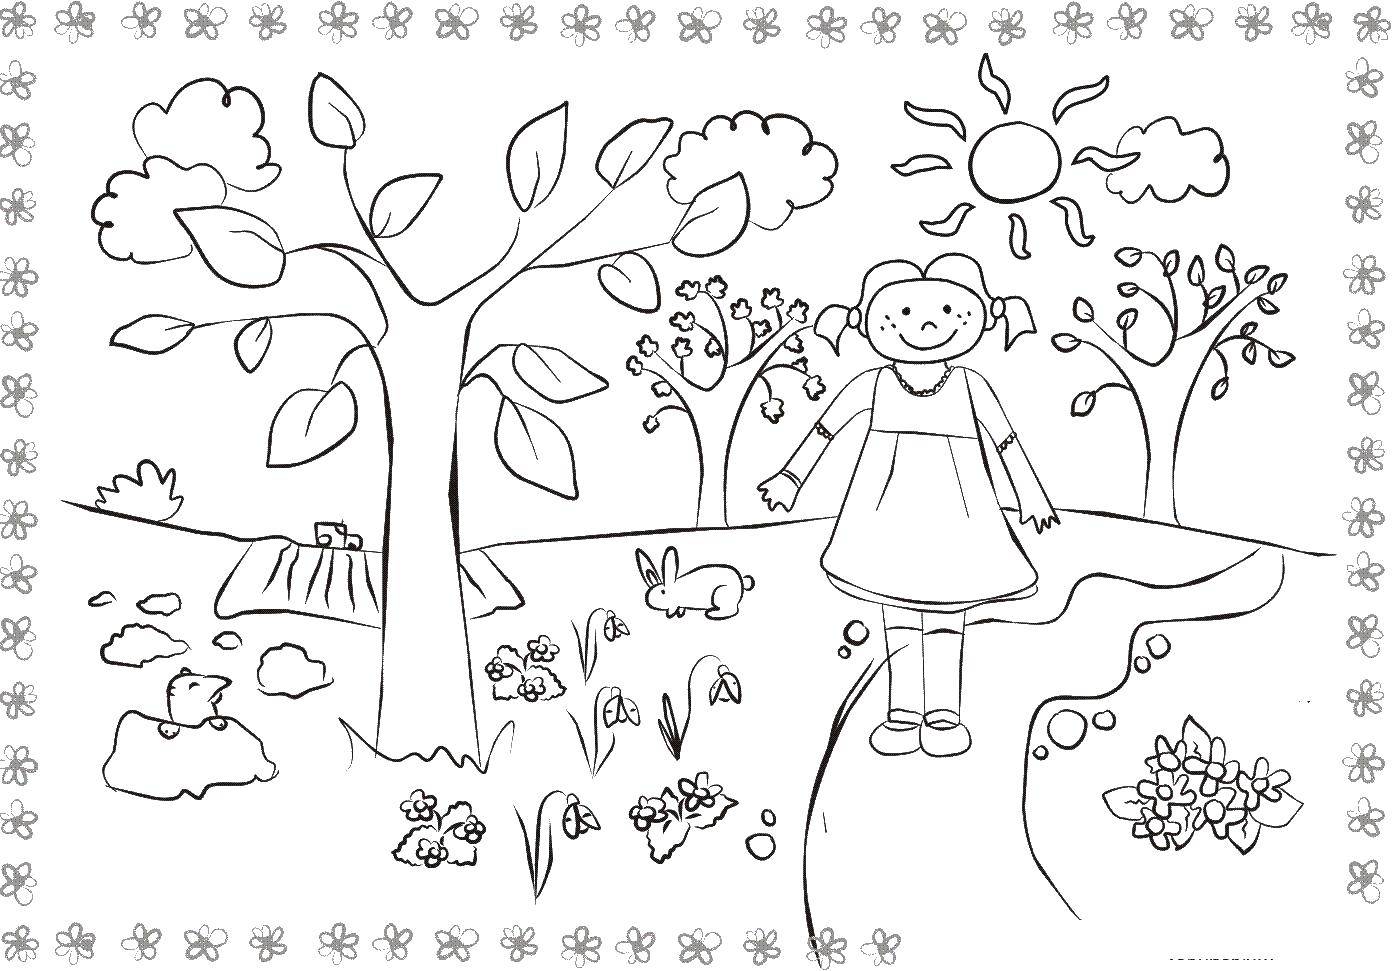 Название: Раскраска Девочка в лесу. Категория: Природа. Теги: природа, лес, девочка, растения.